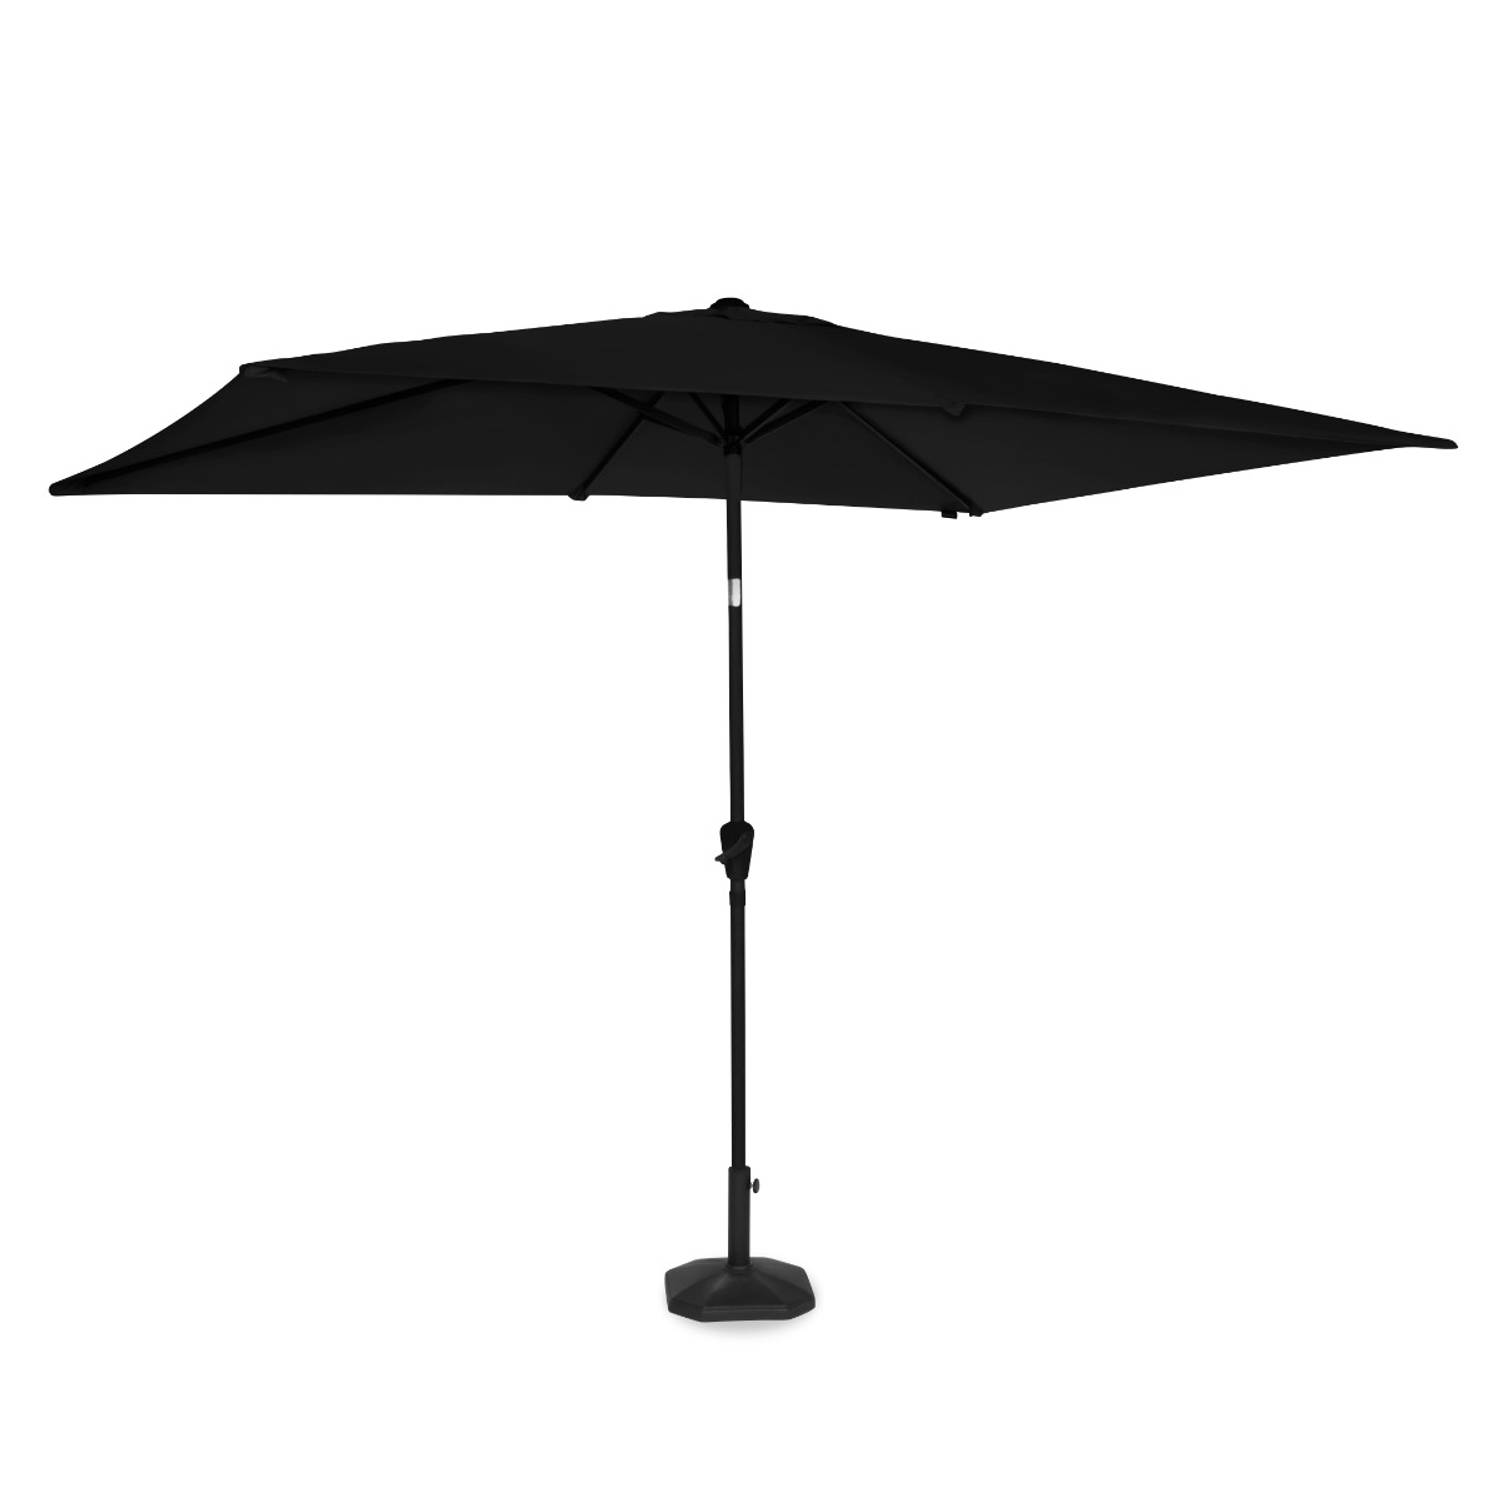 VONROC Premium Parasol Rapallo 200x300cm – Parasol combi set incl. parasolvoet - Kantelbaar – UV werend doek - Antraciet/Zwart – Incl. duurzame beschermhoes